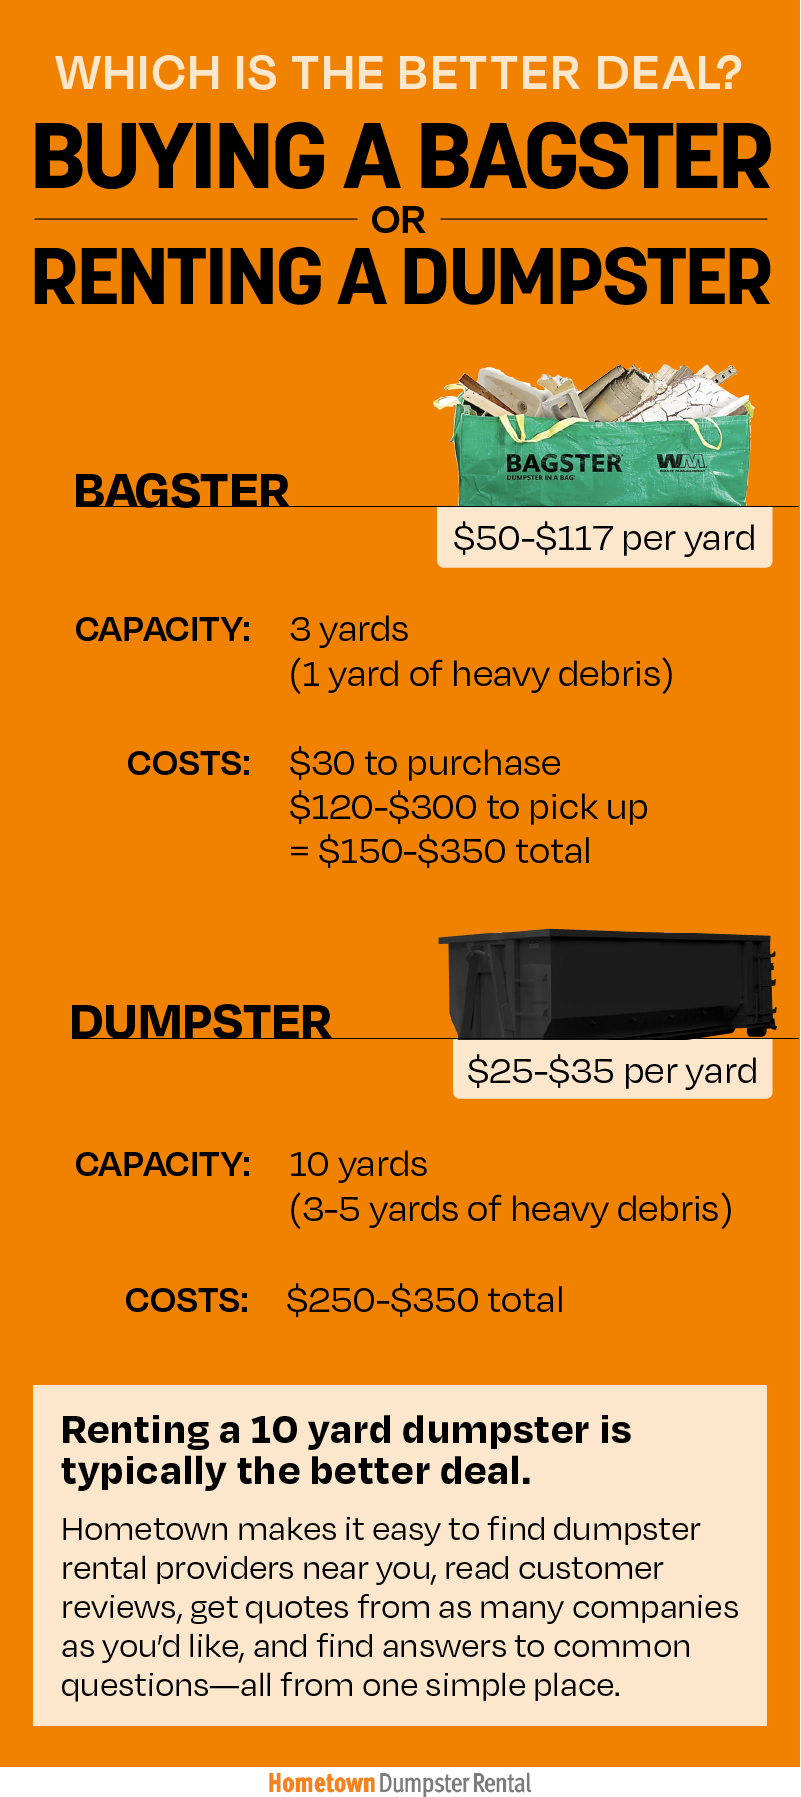 Dumpster Bag vs. Traditional Dumpster: A Visual Comparison